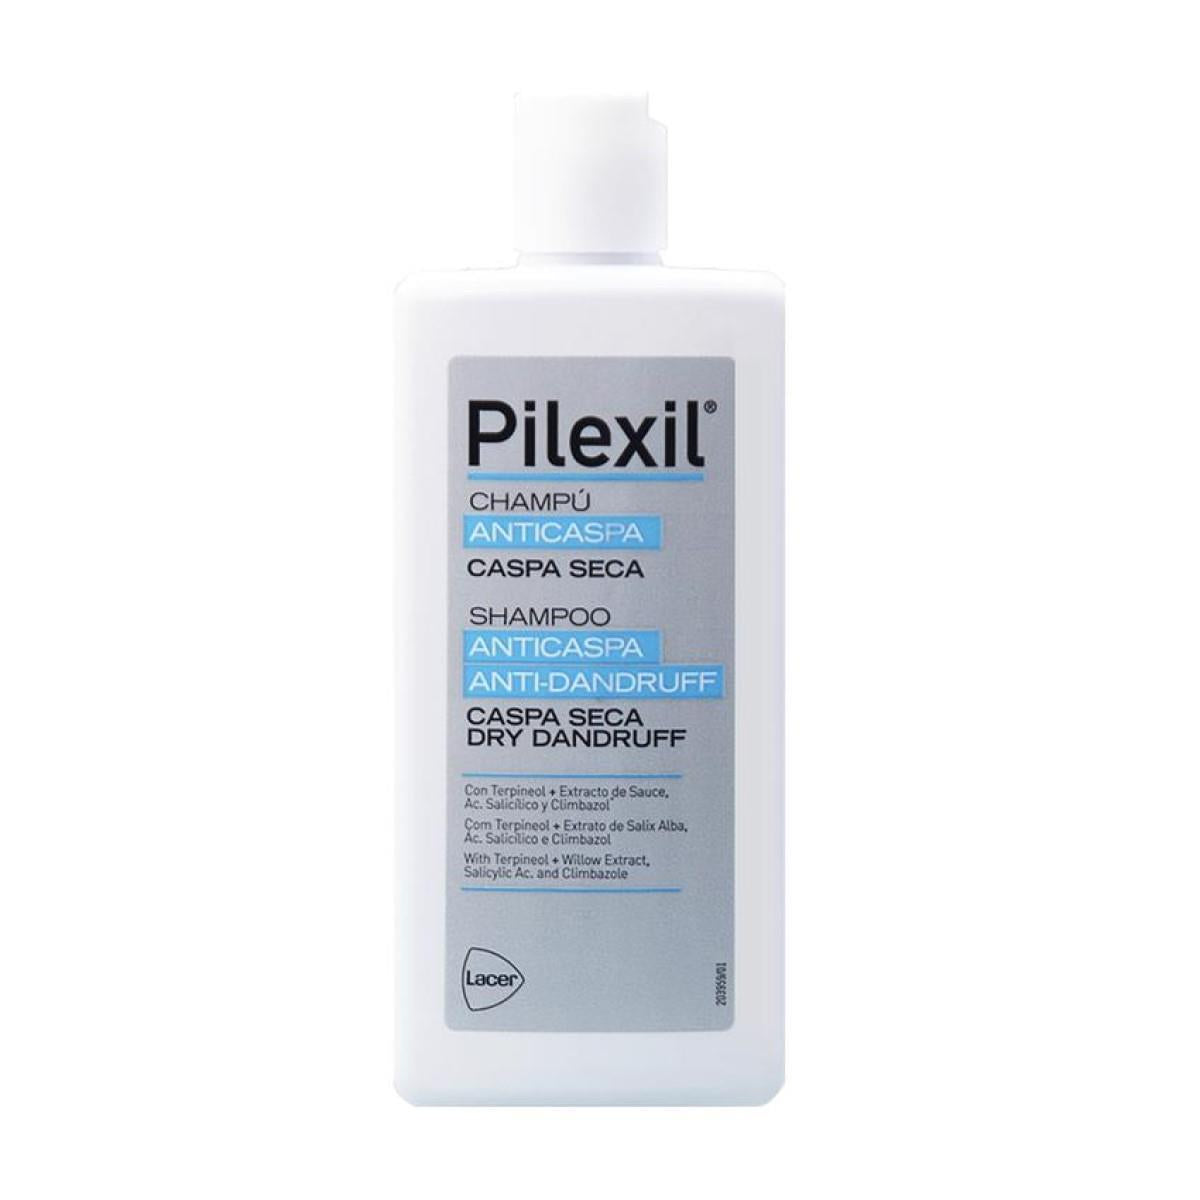 PILEXIL SHAMPOO CASPA SECA 300ML – The Skin Pharmacy